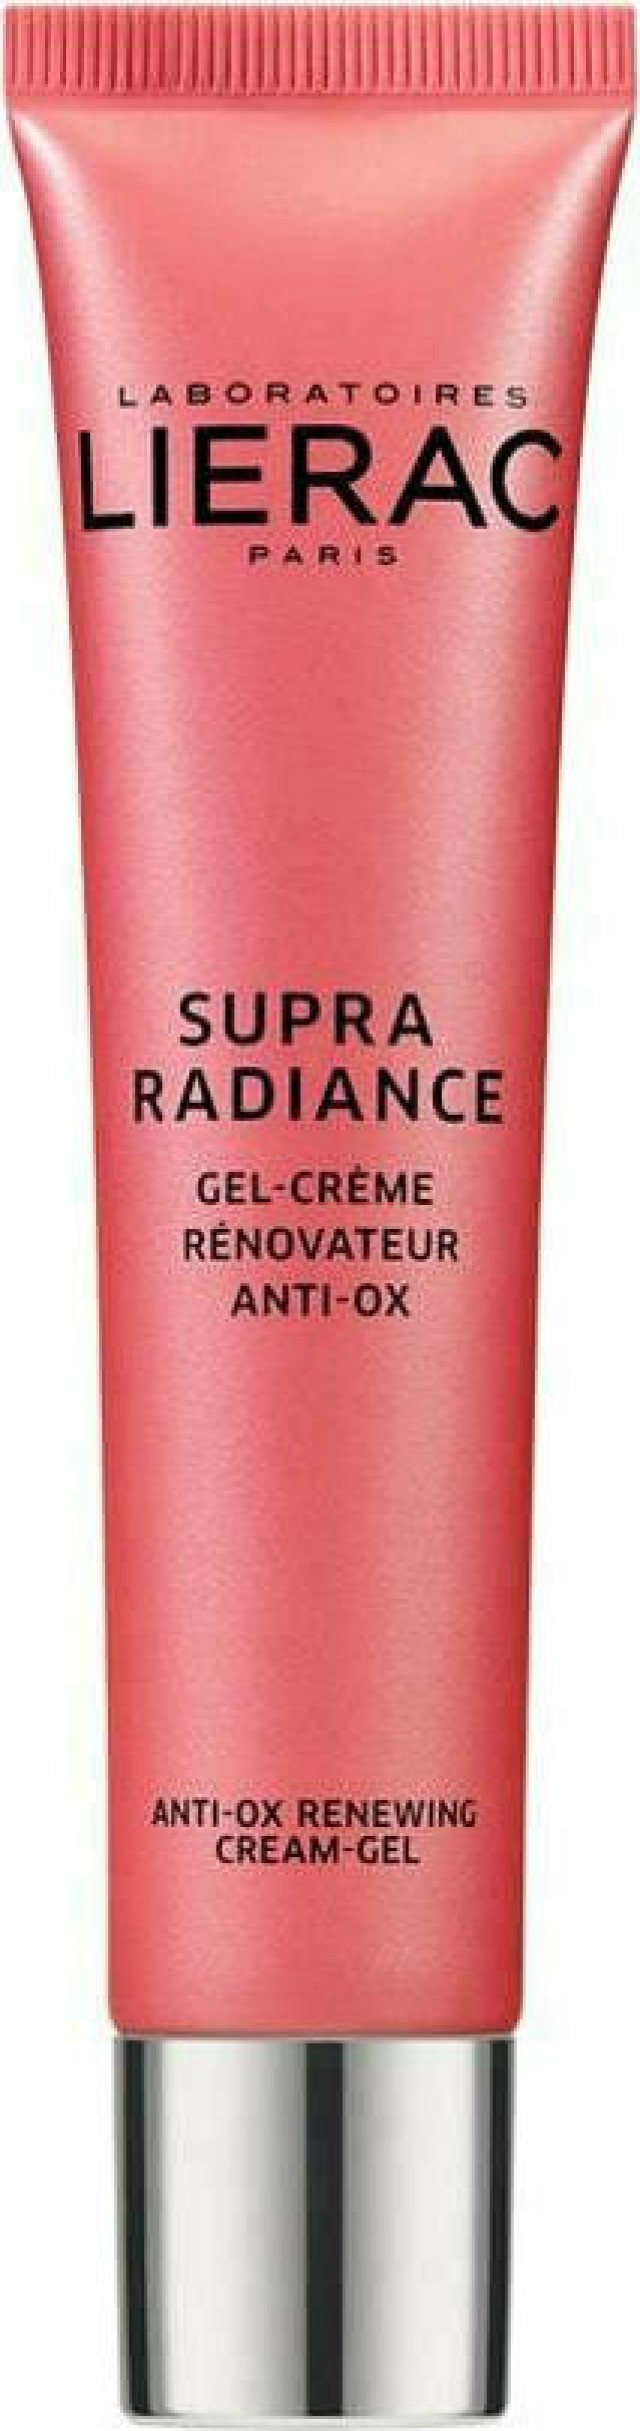 Lierac Supra Radiance Anti-Ox Renewing Cream-Gel 30ml